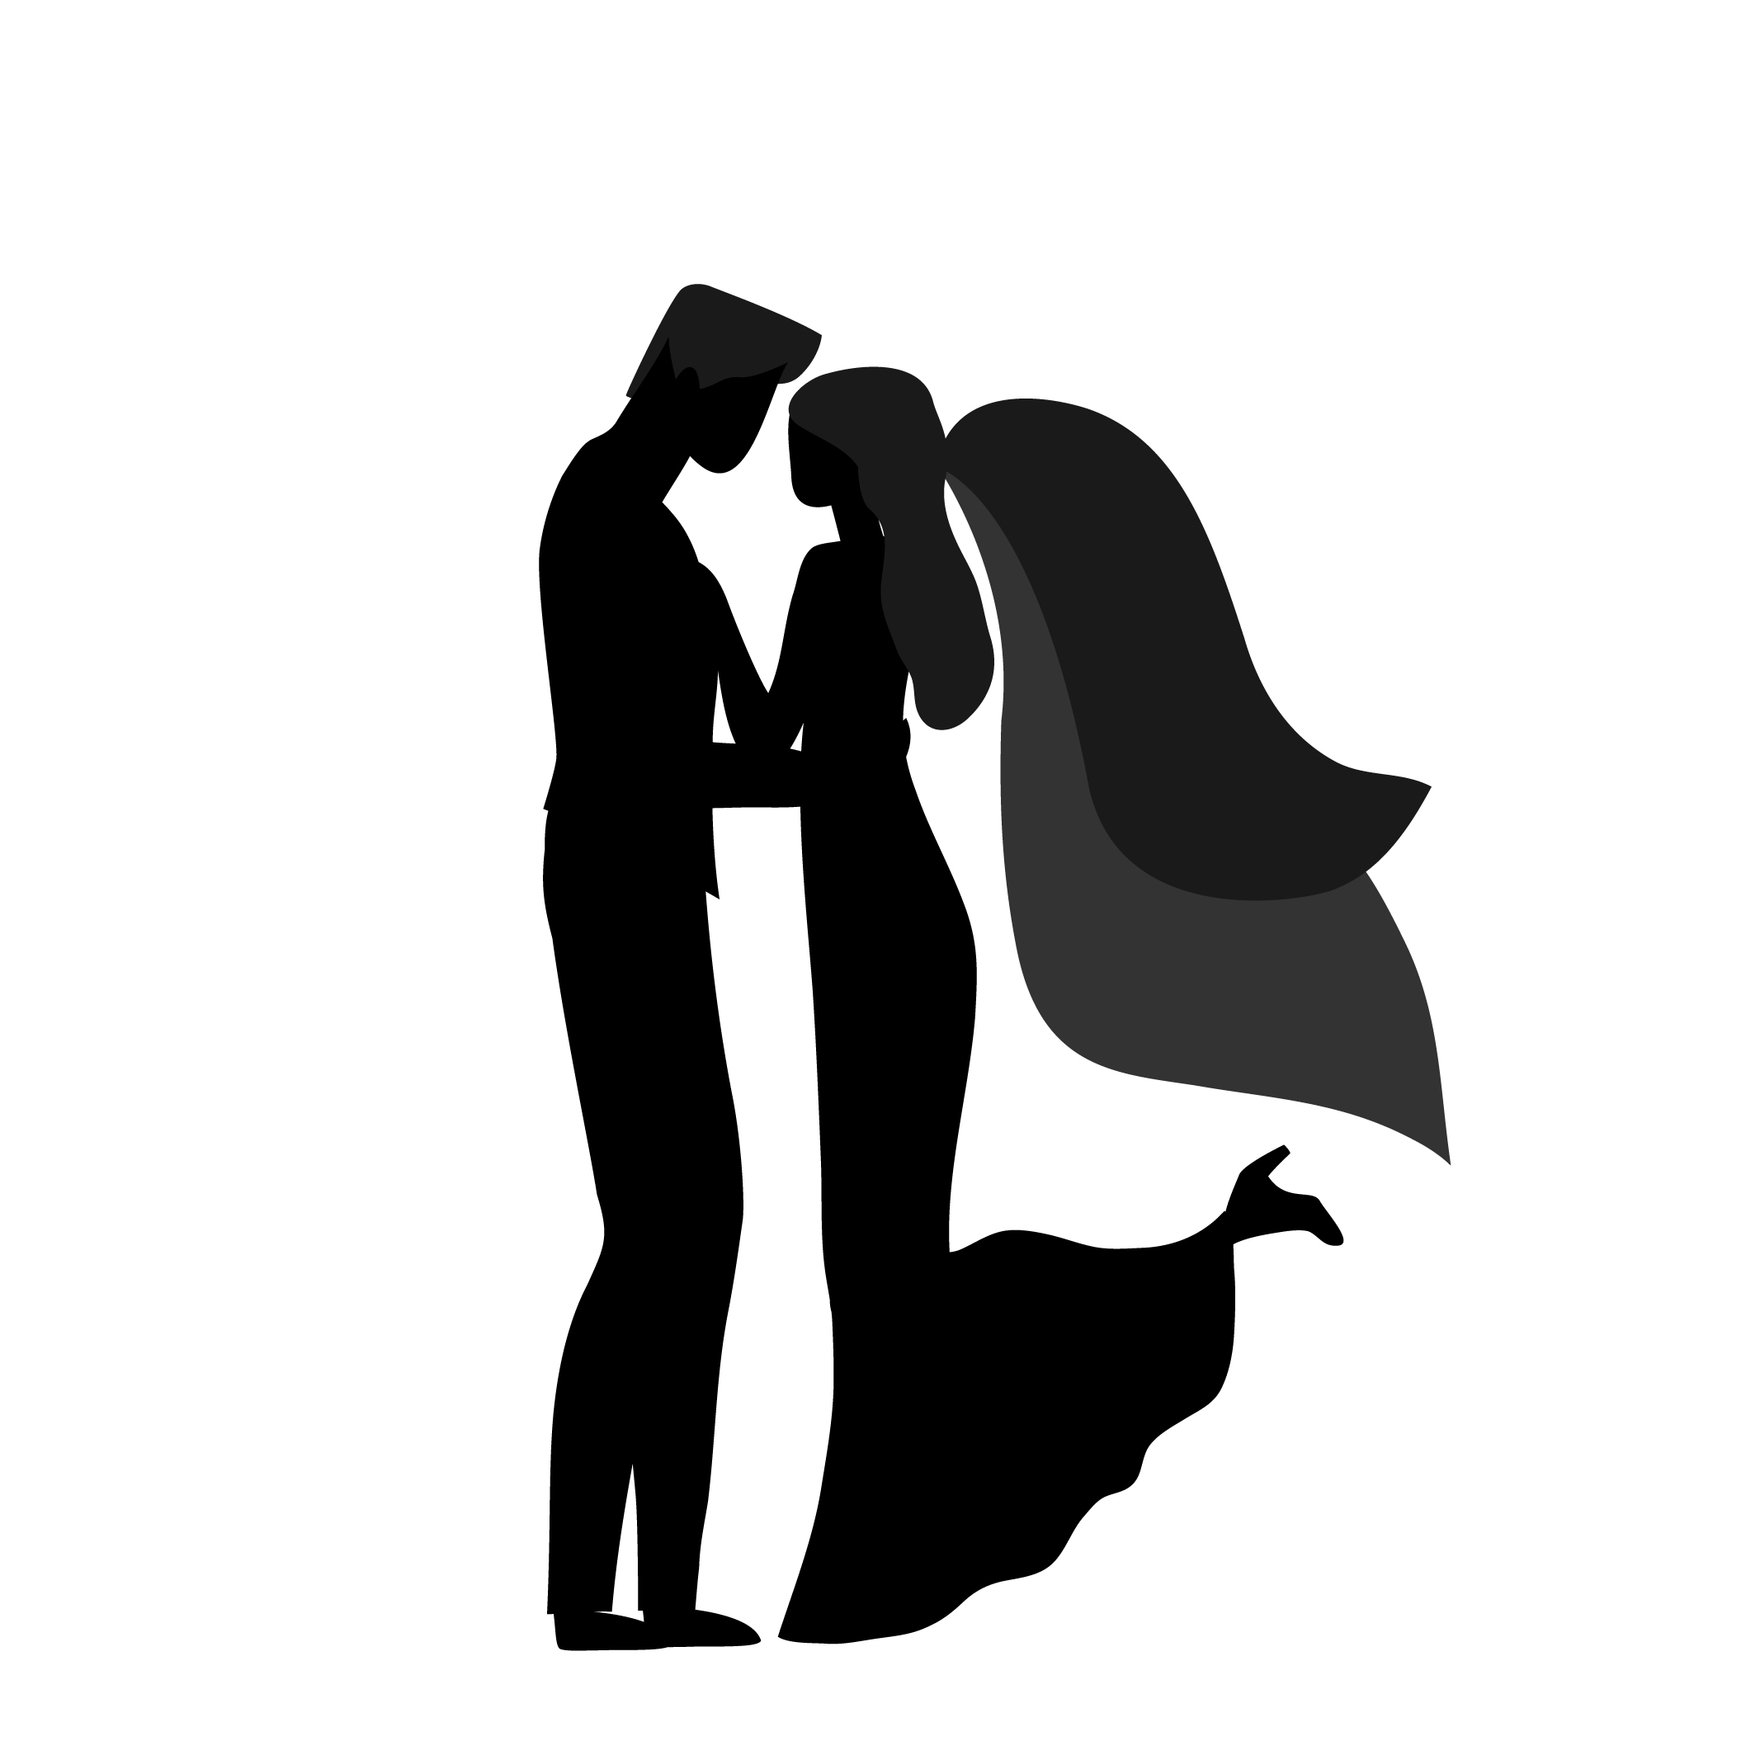 Black Wedding Silhouette in Illustrator, EPS, SVG, JPG, PNG